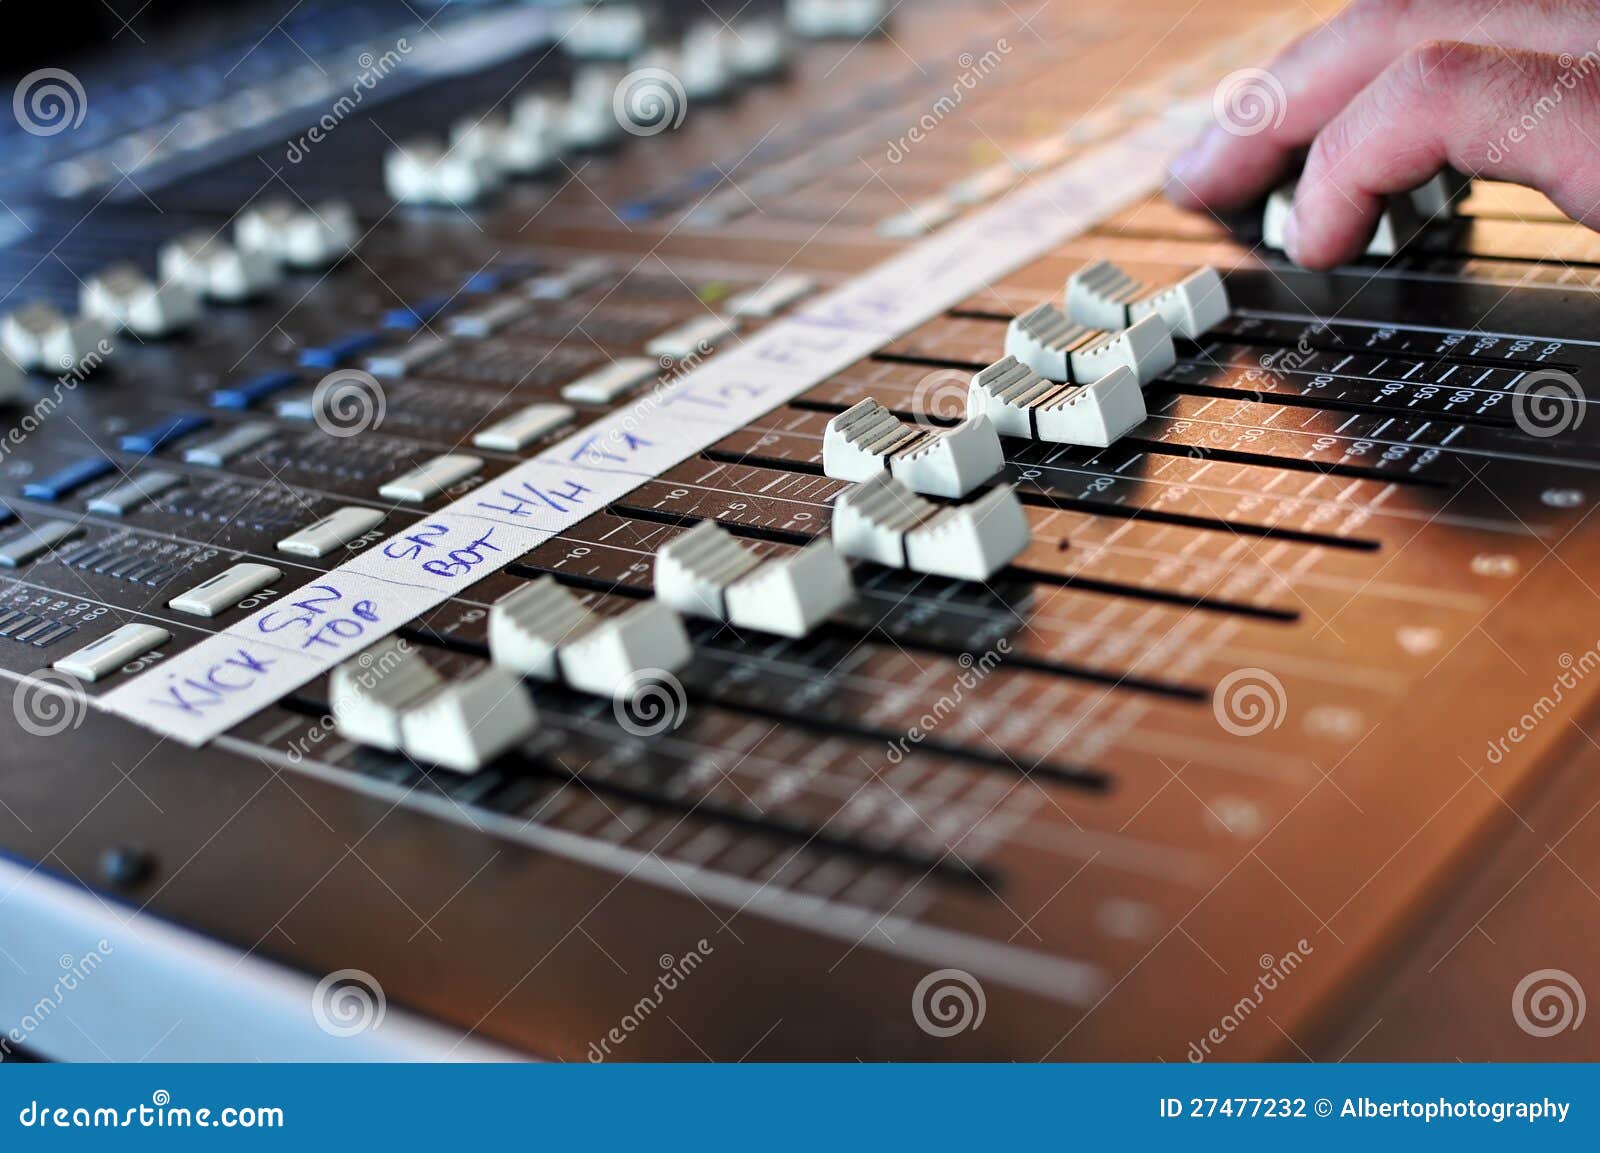 Sound mix board stock photo. Image of band, black, machine - 27477232